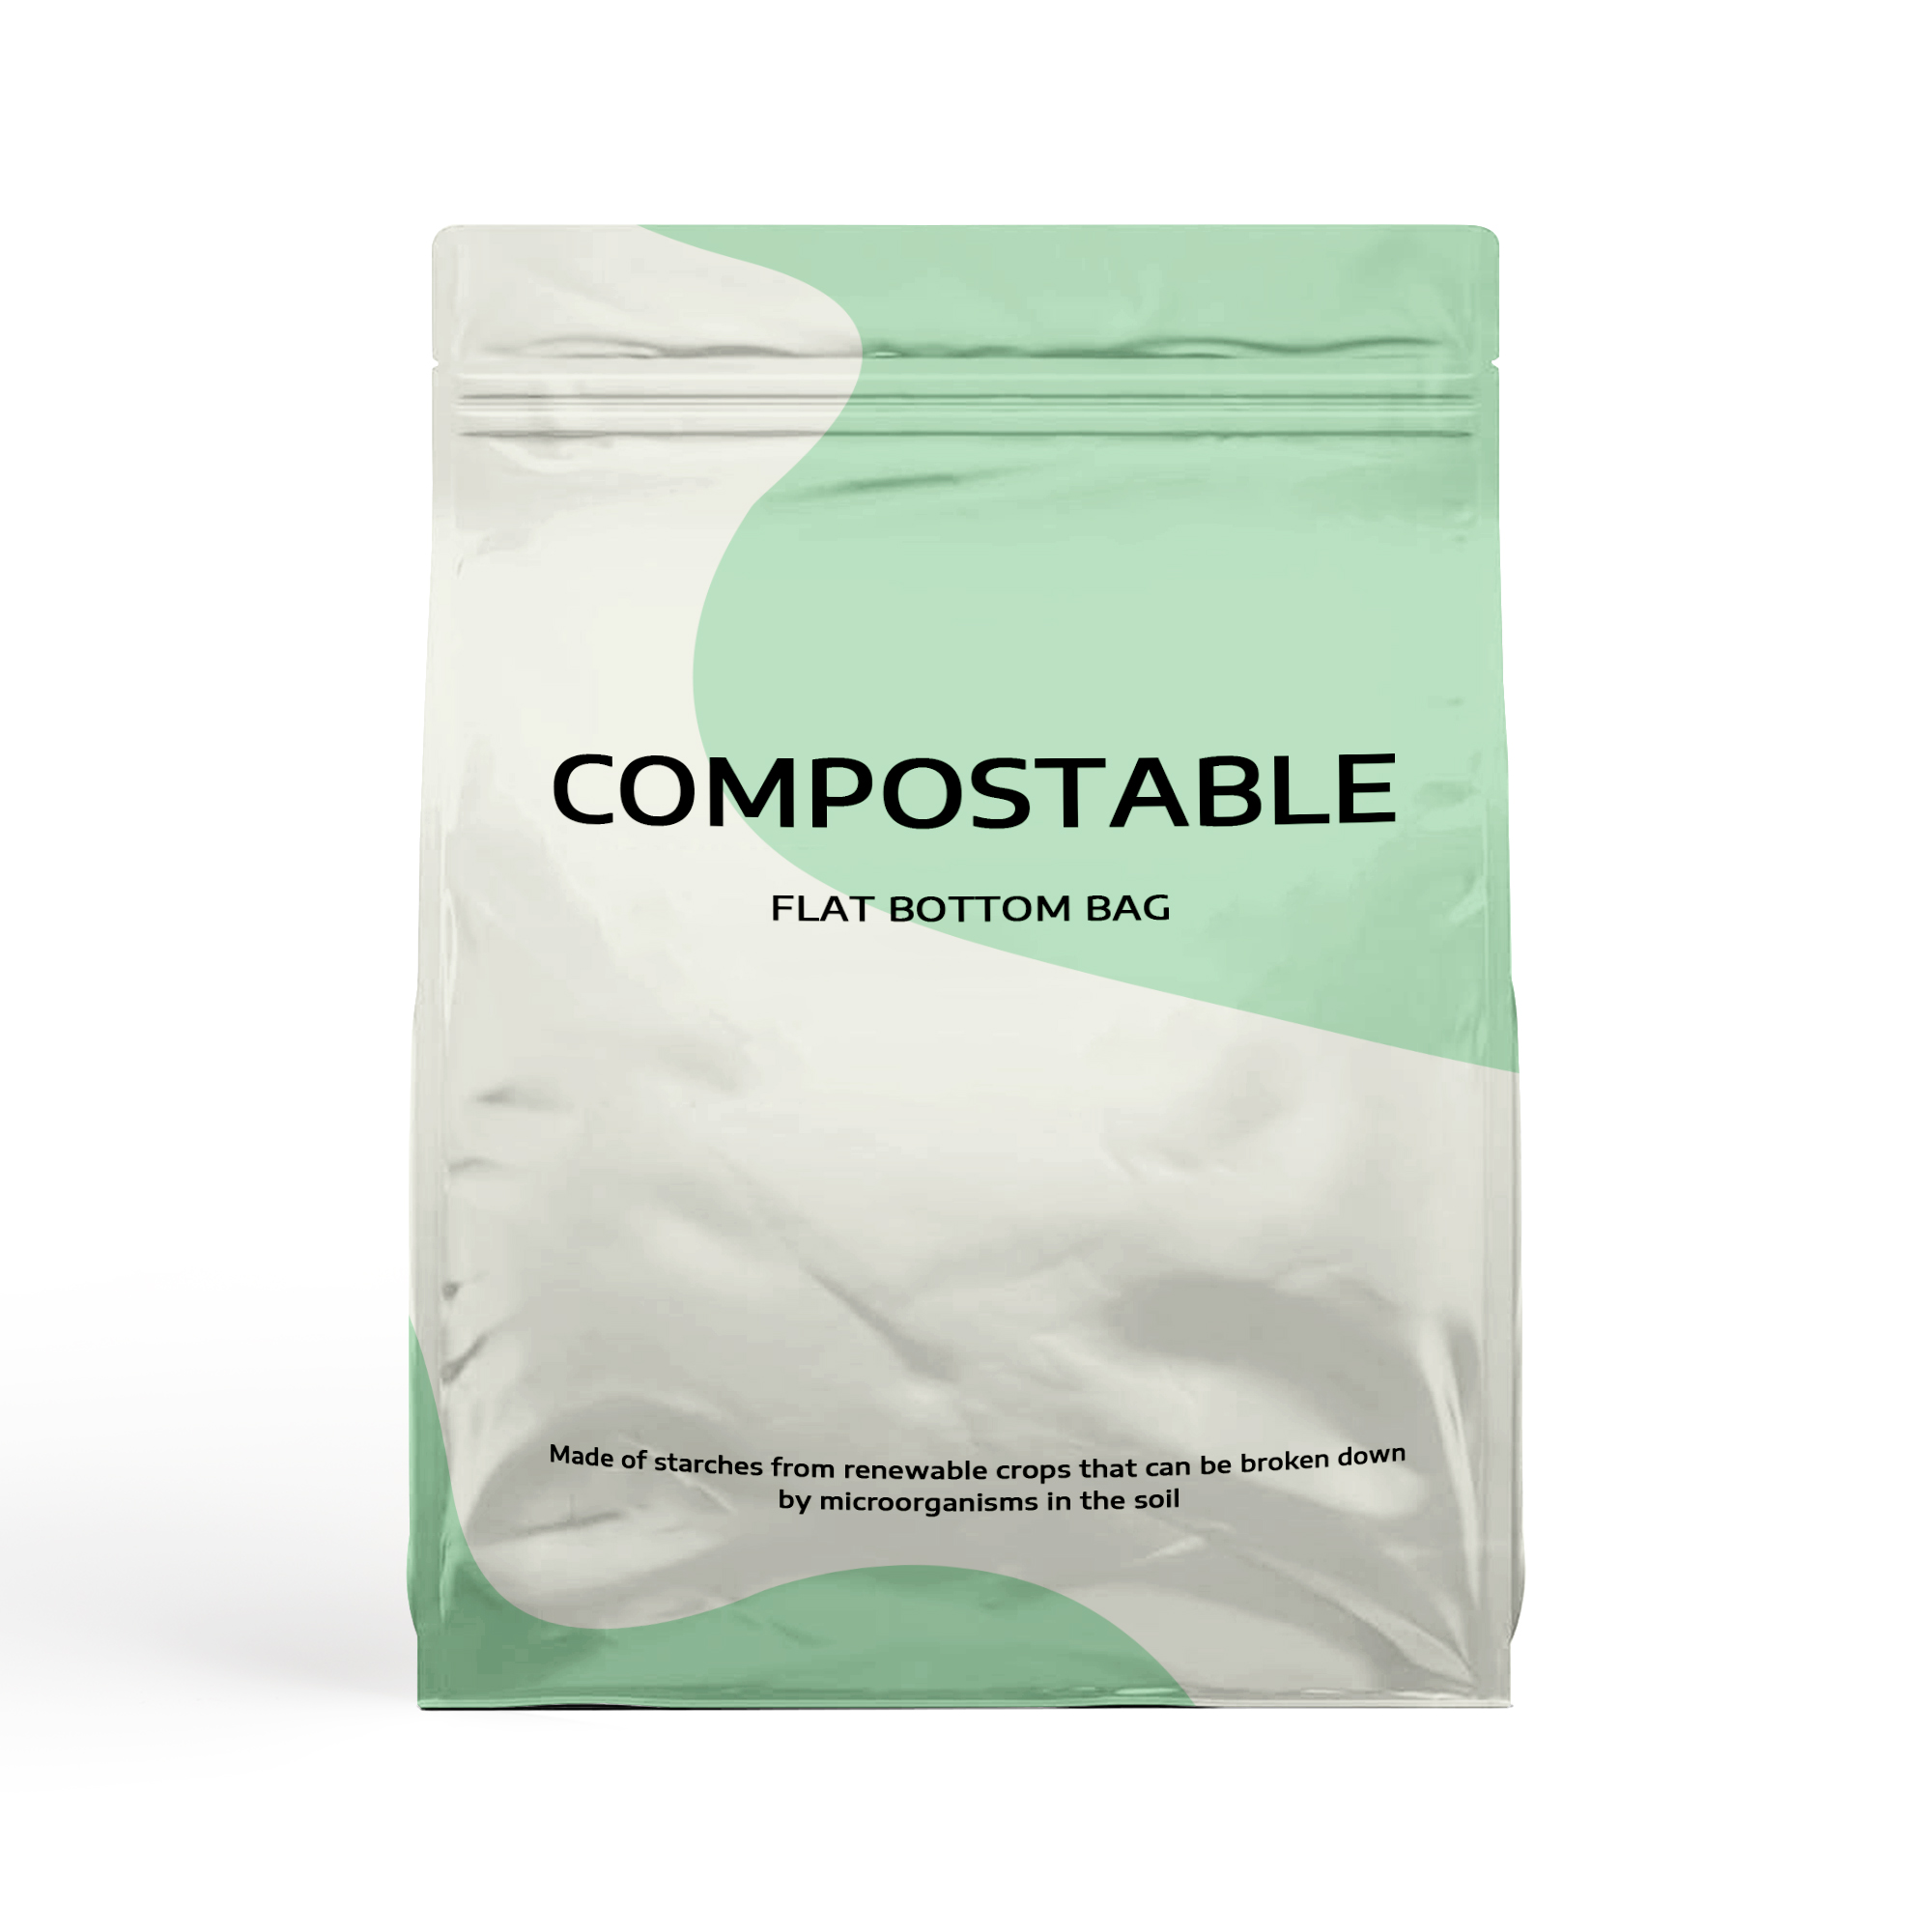 Bolsa de fondo plano compostable